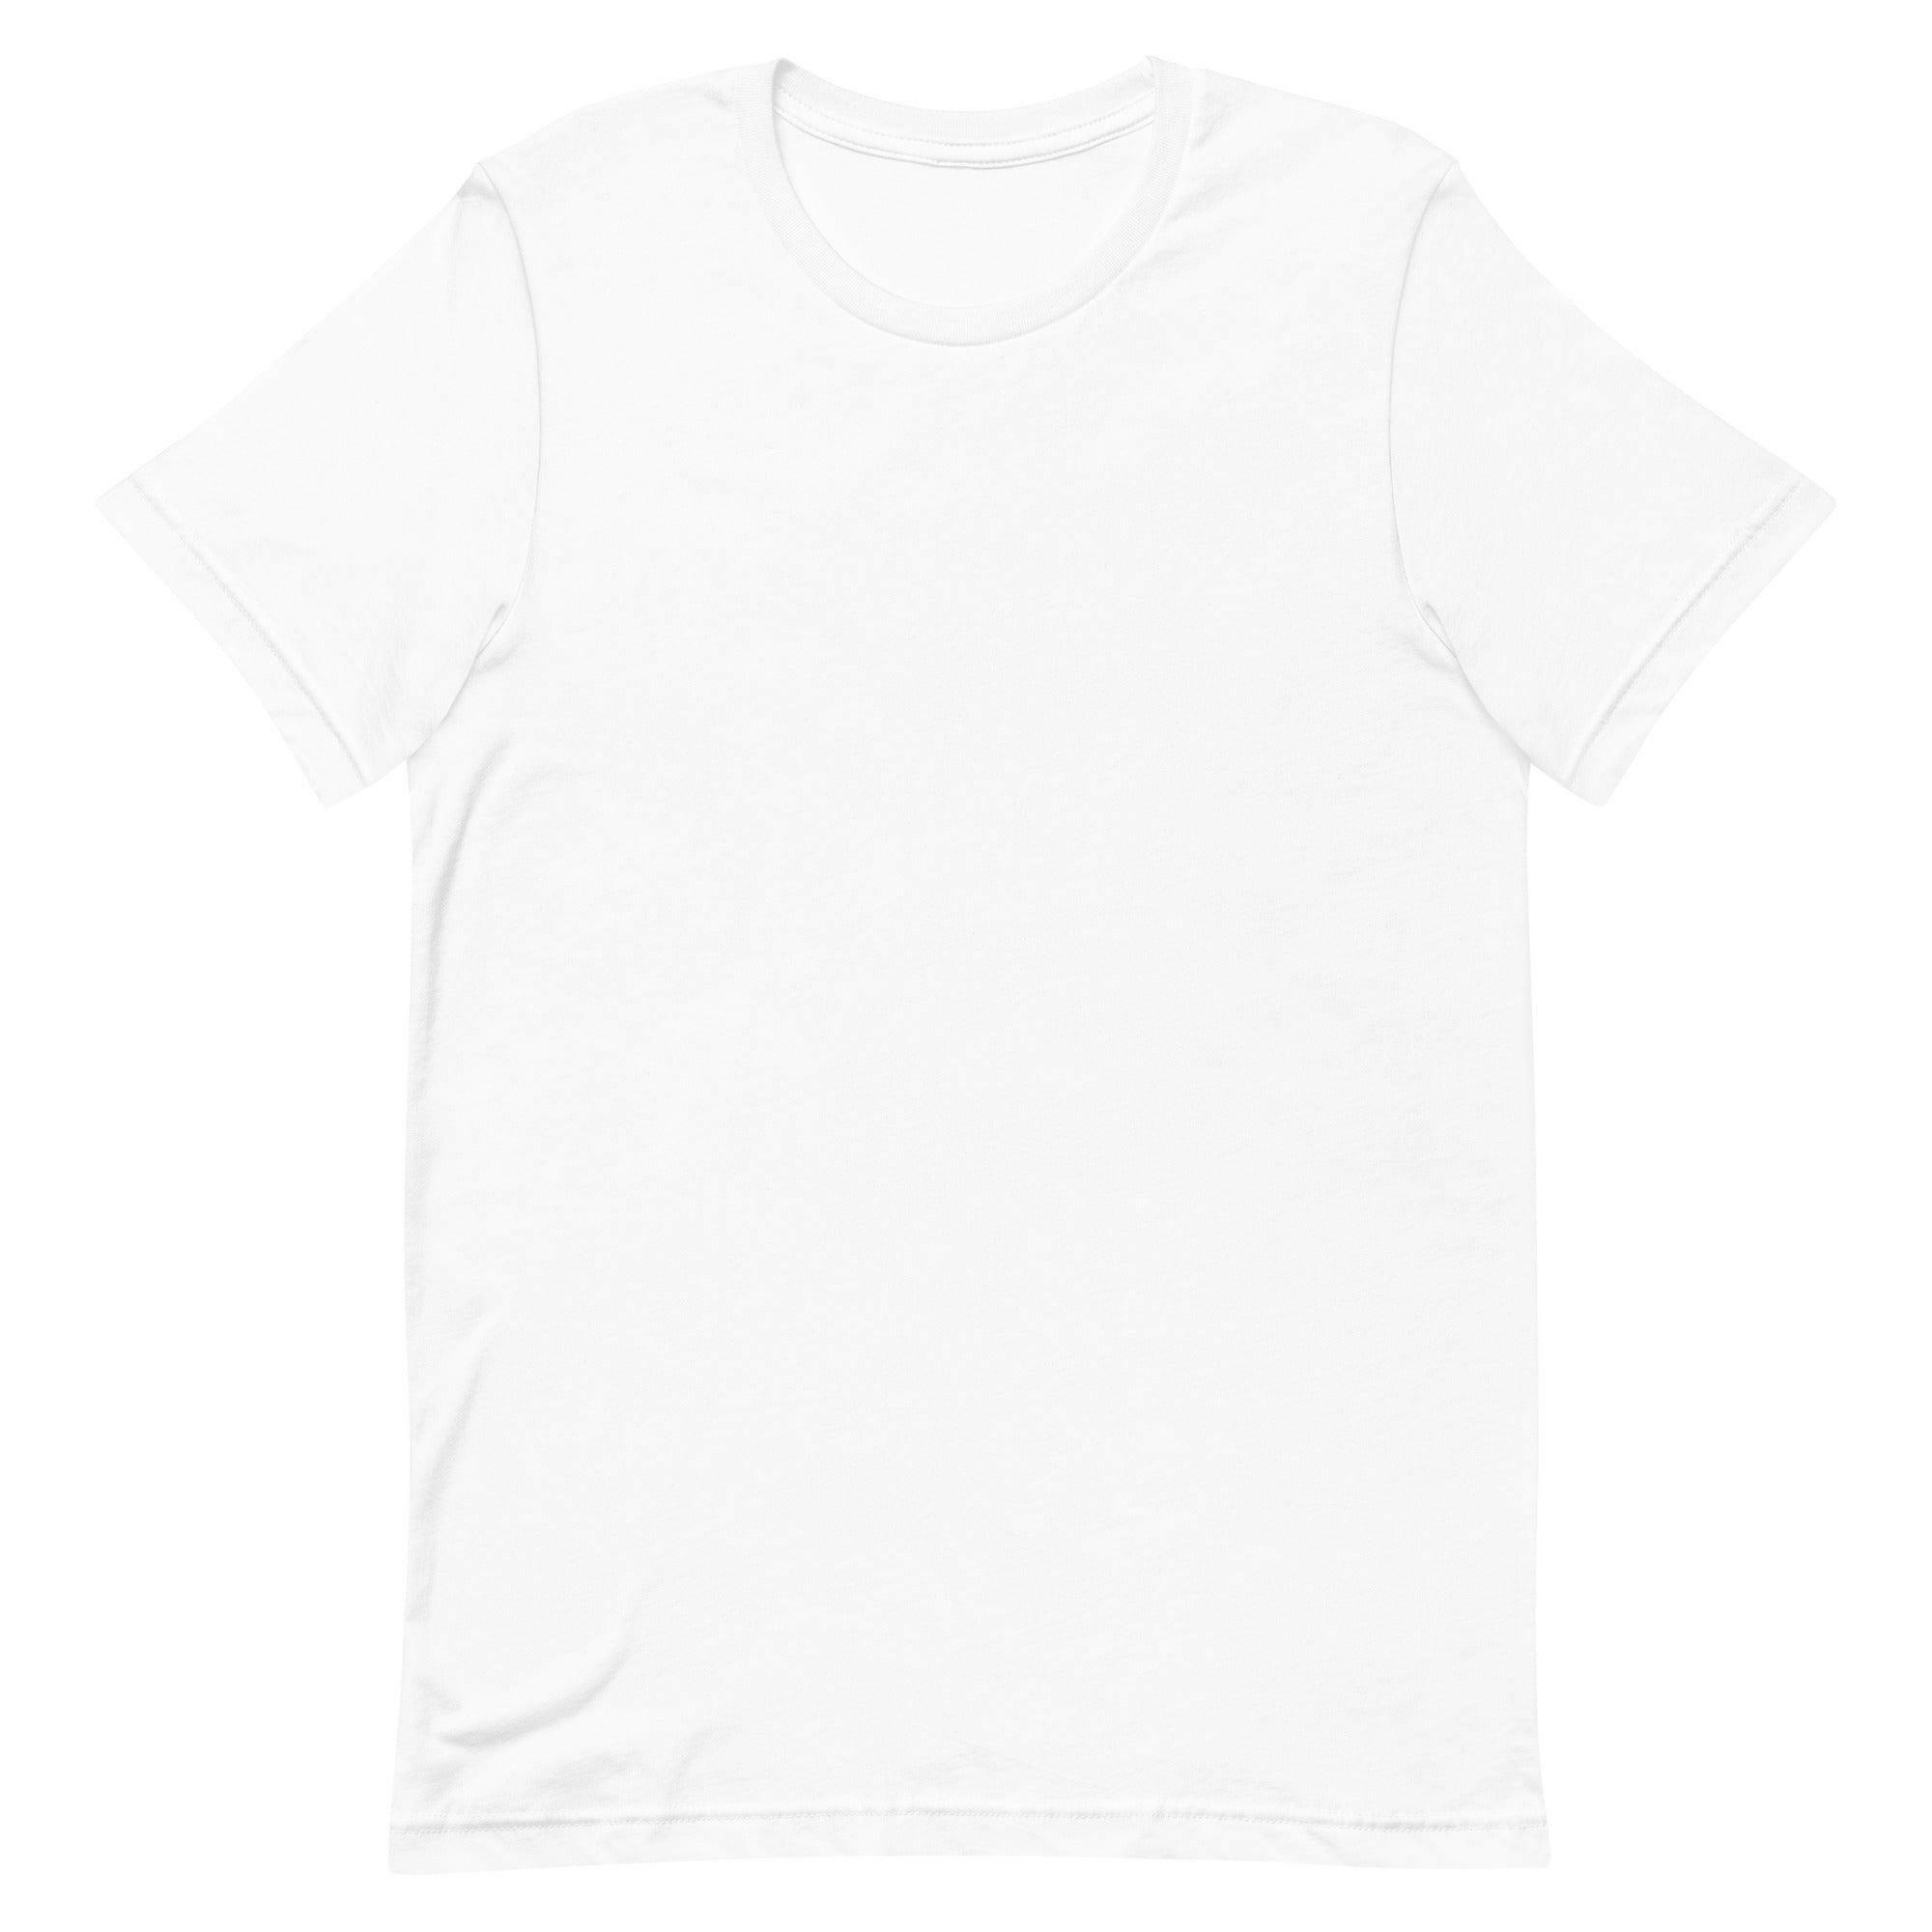 FxCK THEM Unisex t-shirt - GENUINE AUTHENTIC BRAND LLC